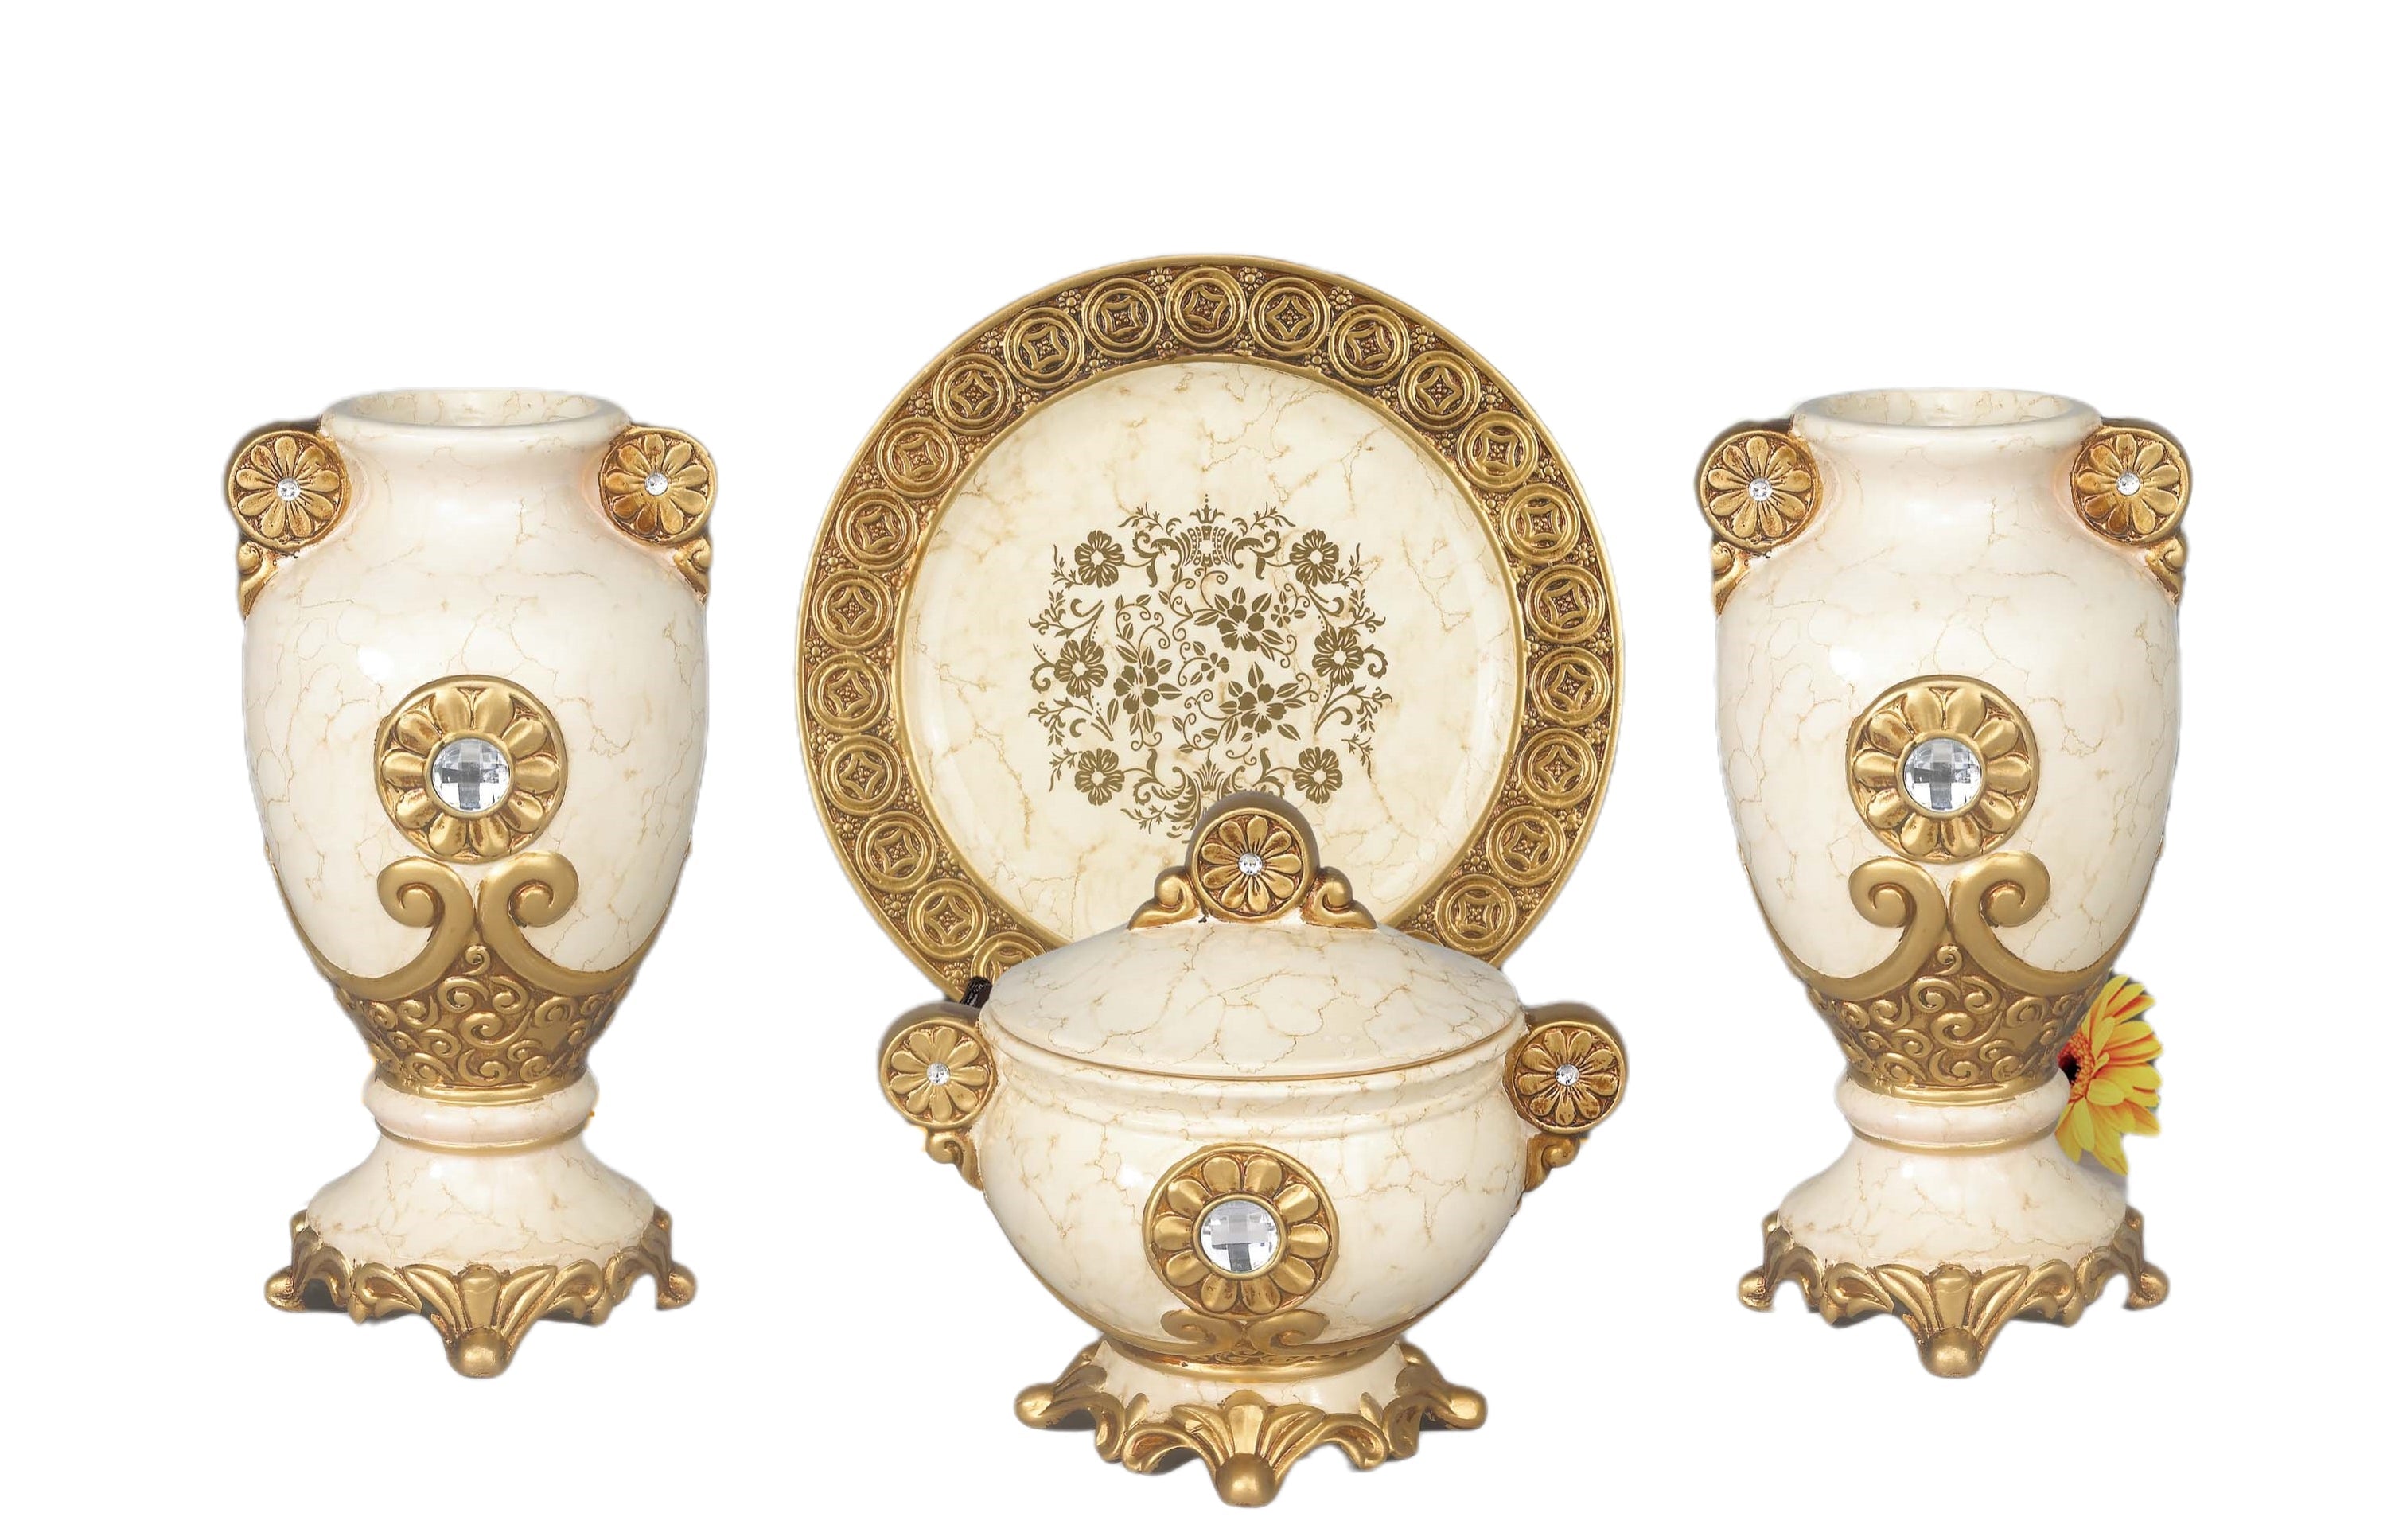 Adore the Decor® Four Piece Vase Accessory Set - Adore the Decor